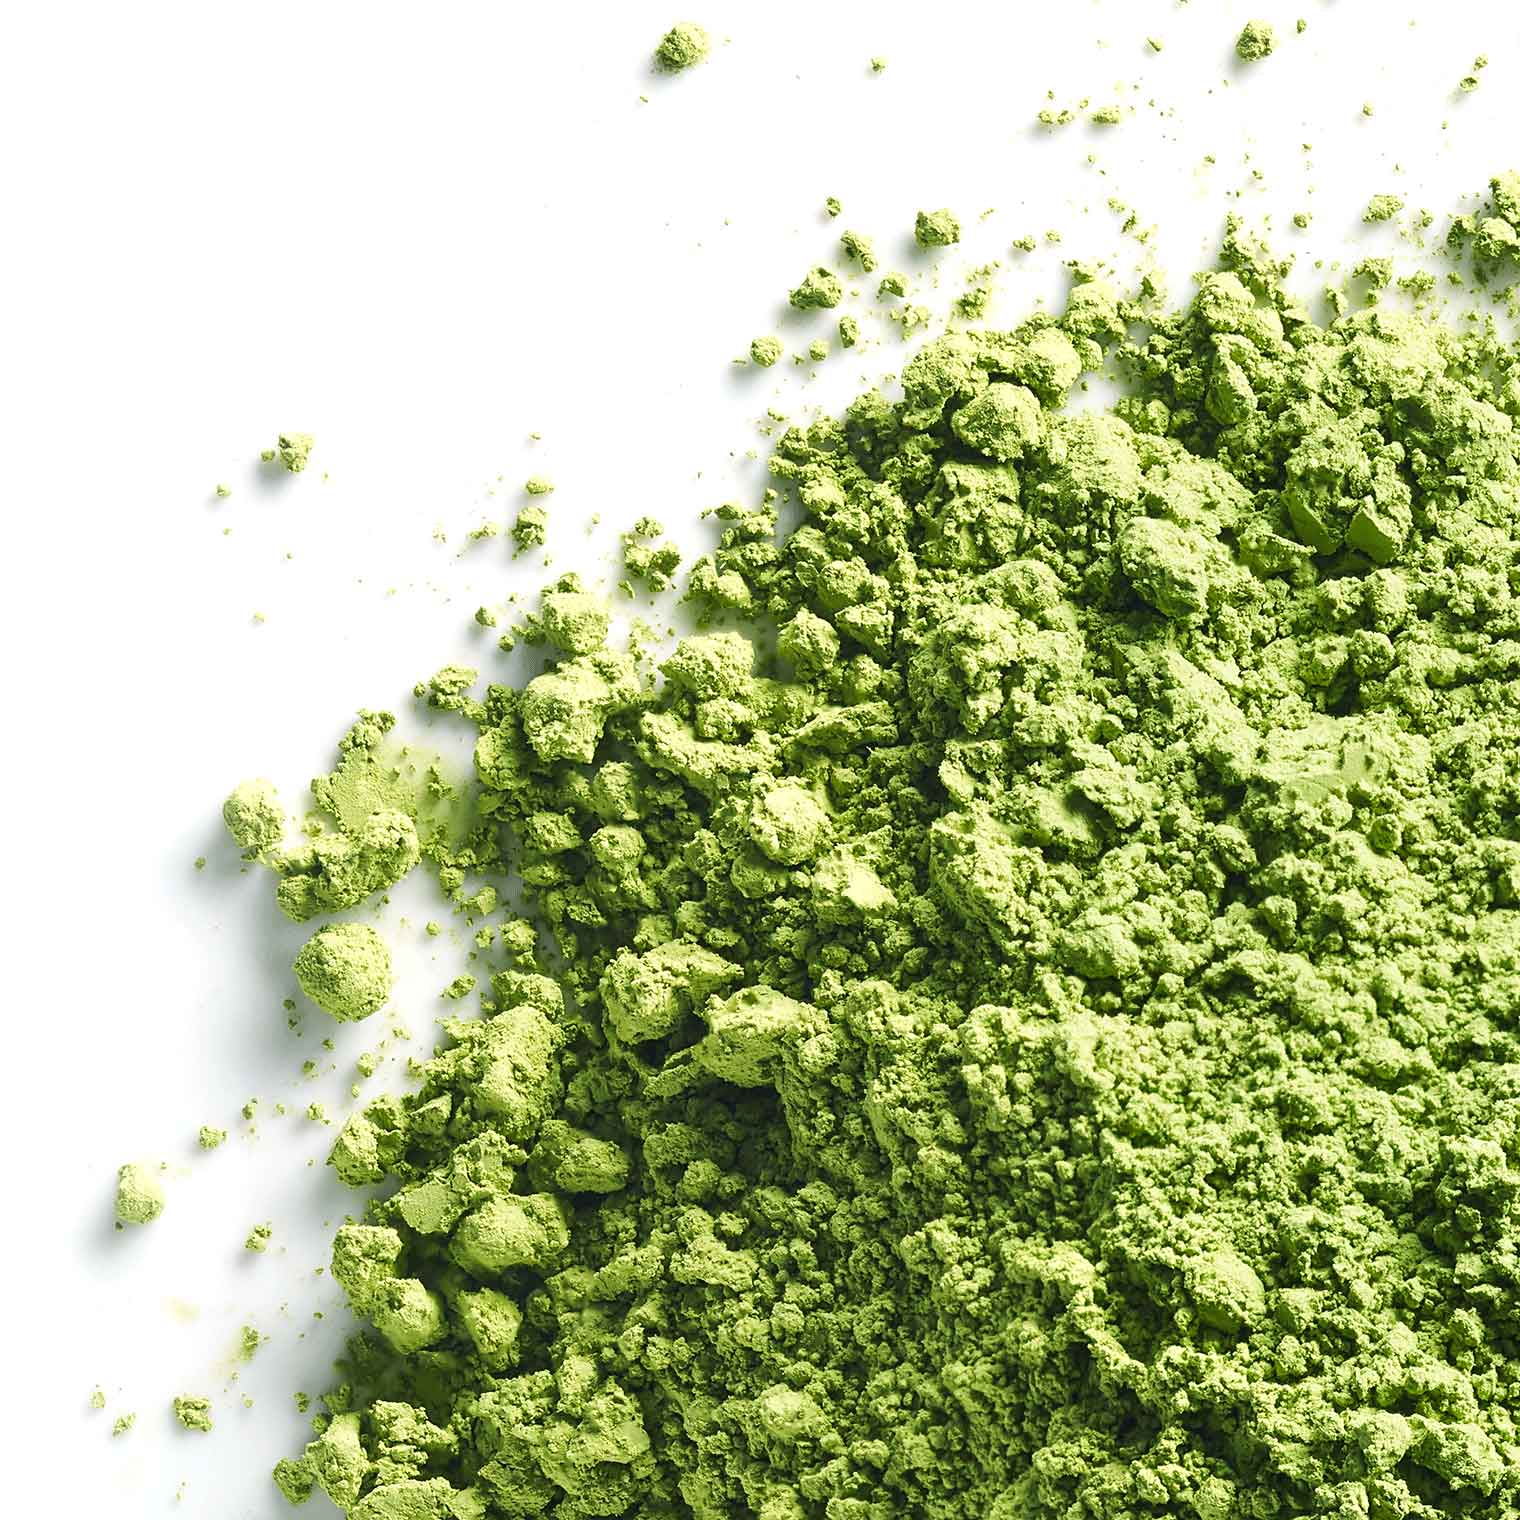 Green Matcha Powder